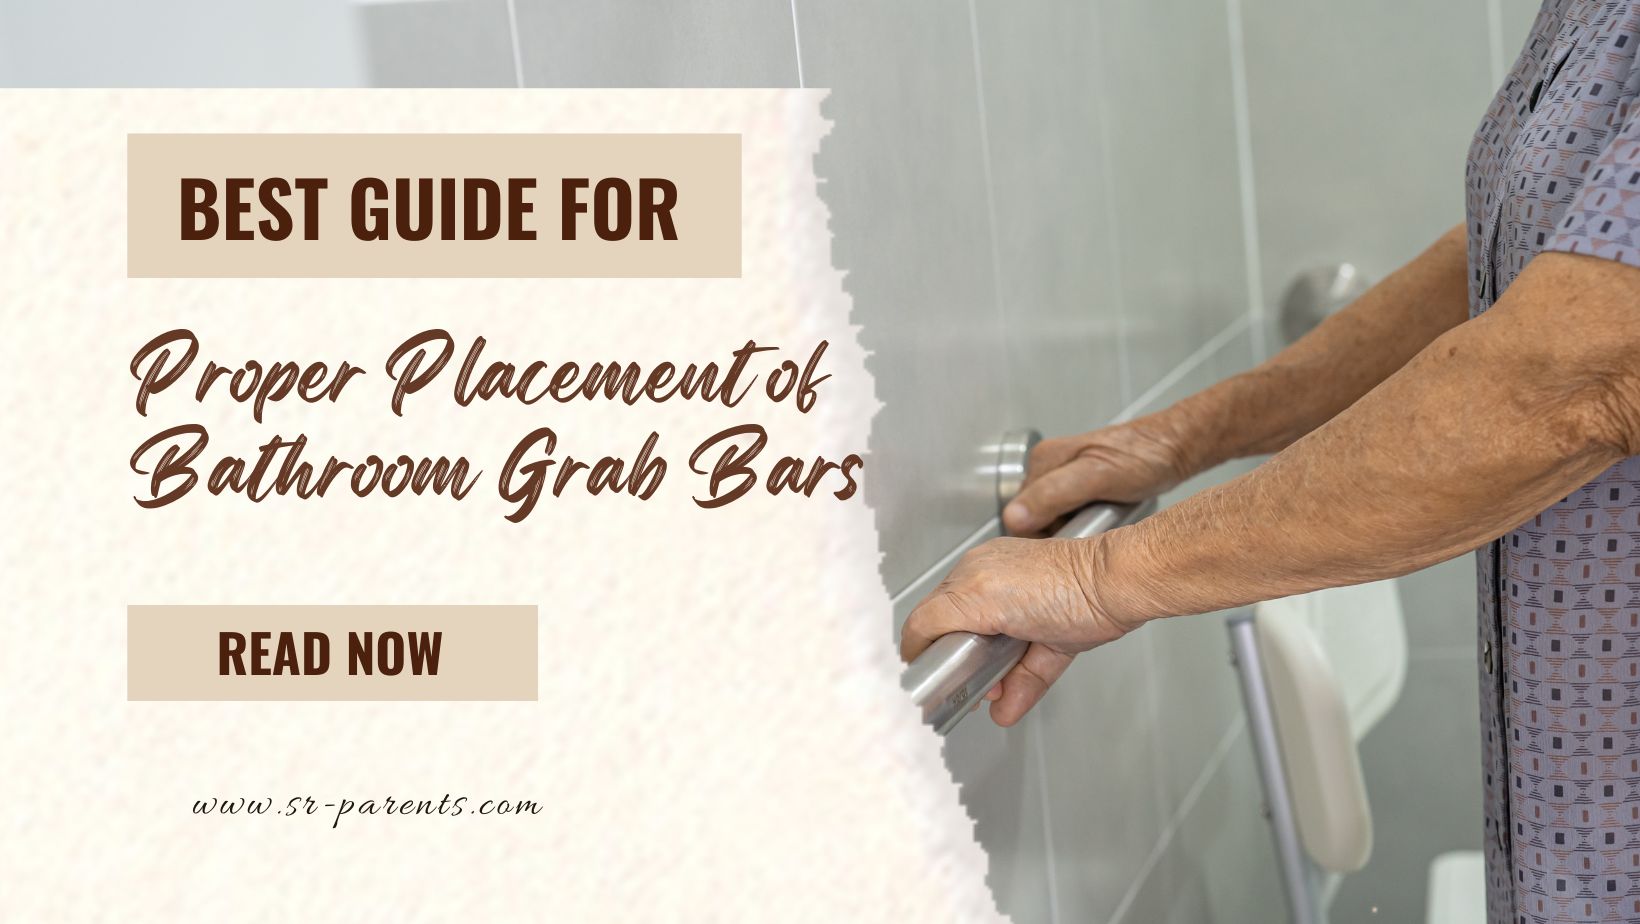 https://sr-parents.com/wp-content/uploads/2022/11/Best-Guide-for-Proper-Placement-of-Bathroom-Grab-Bars.jpg